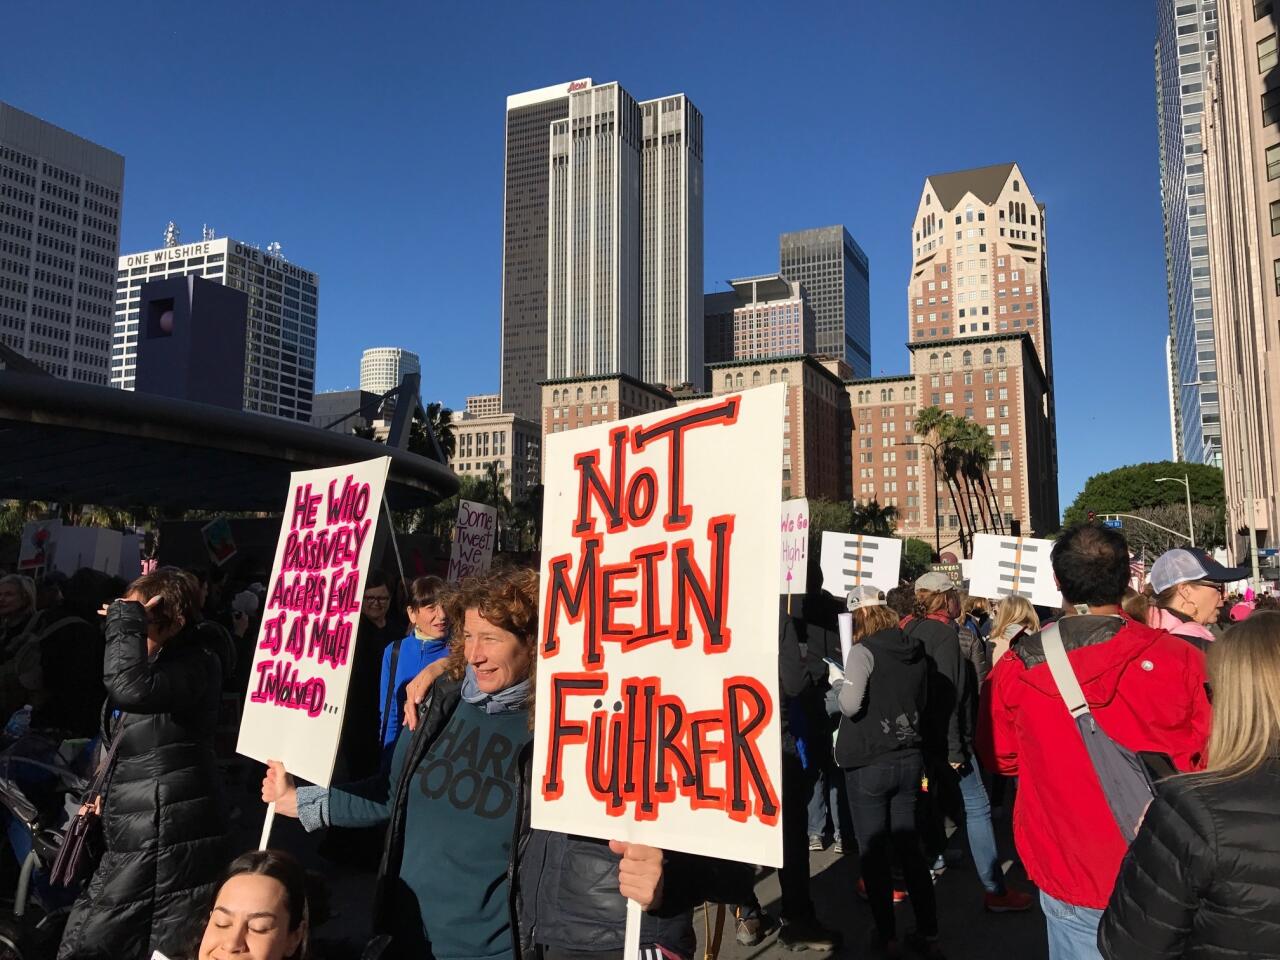 Los Angeles women's march